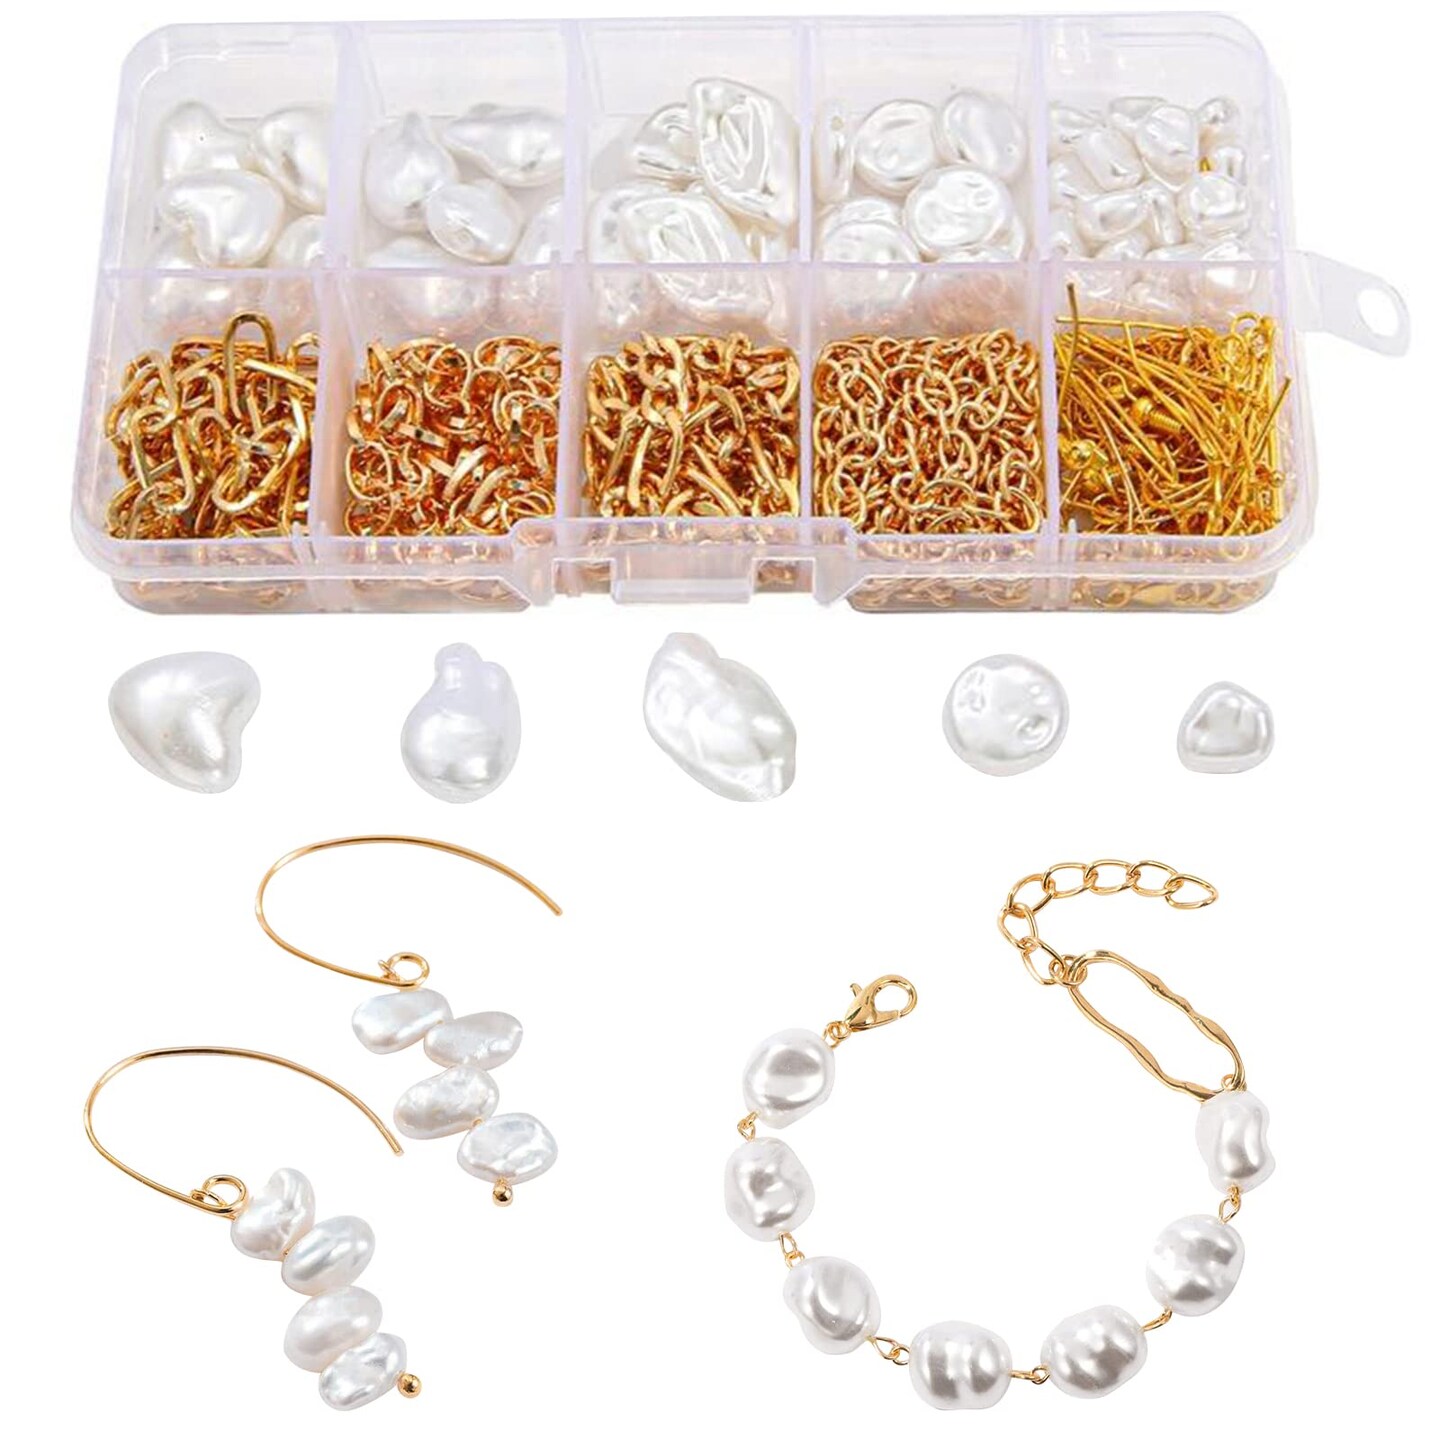 SEMATA Beads Kit Bracelet Making Kit Bracelet Beads for Jewelry Making ...